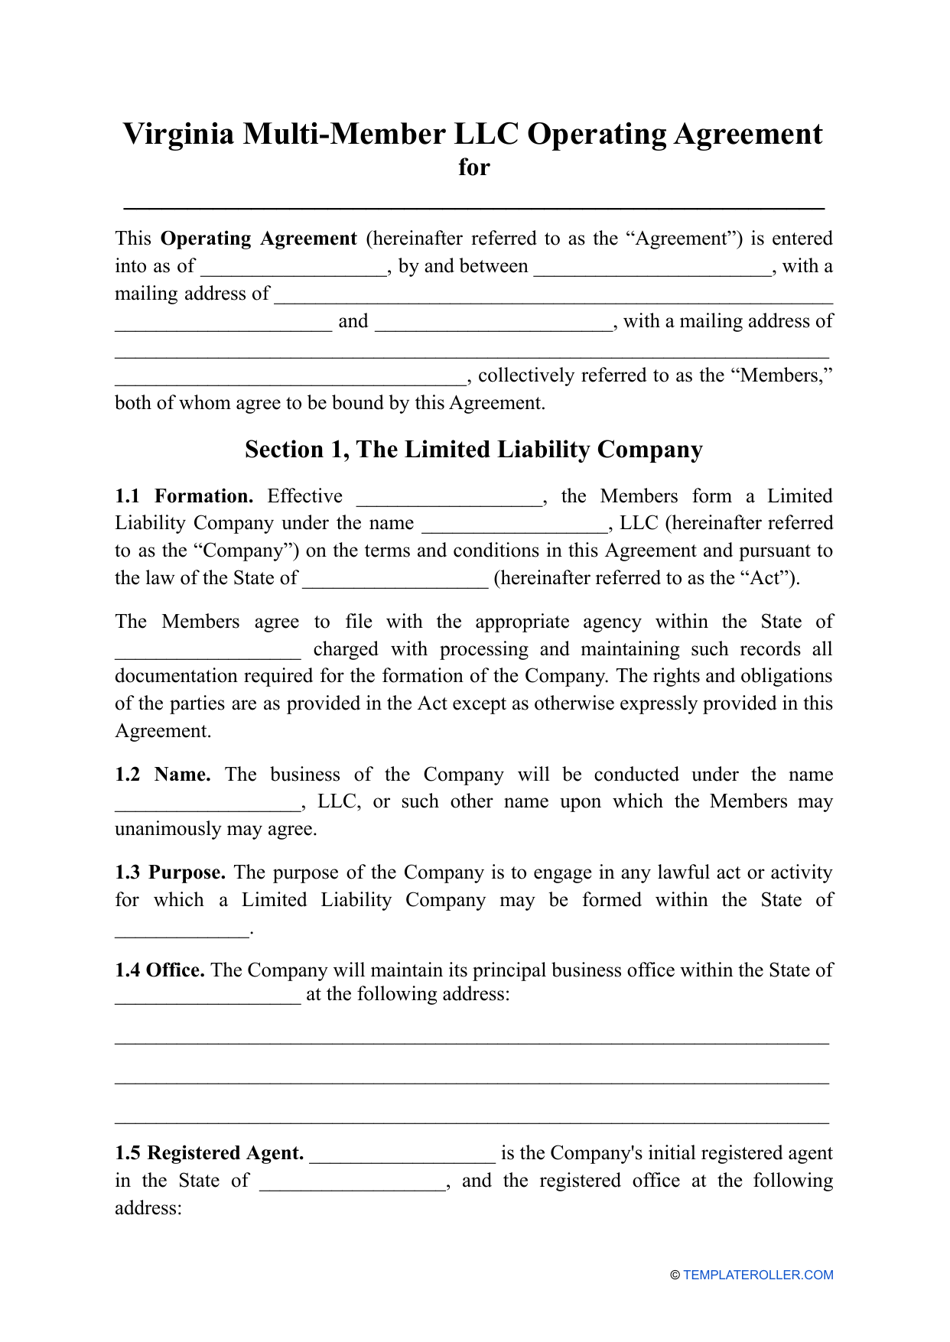 Multi-Member LLC Operating Agreement Template - Virginia, Page 1